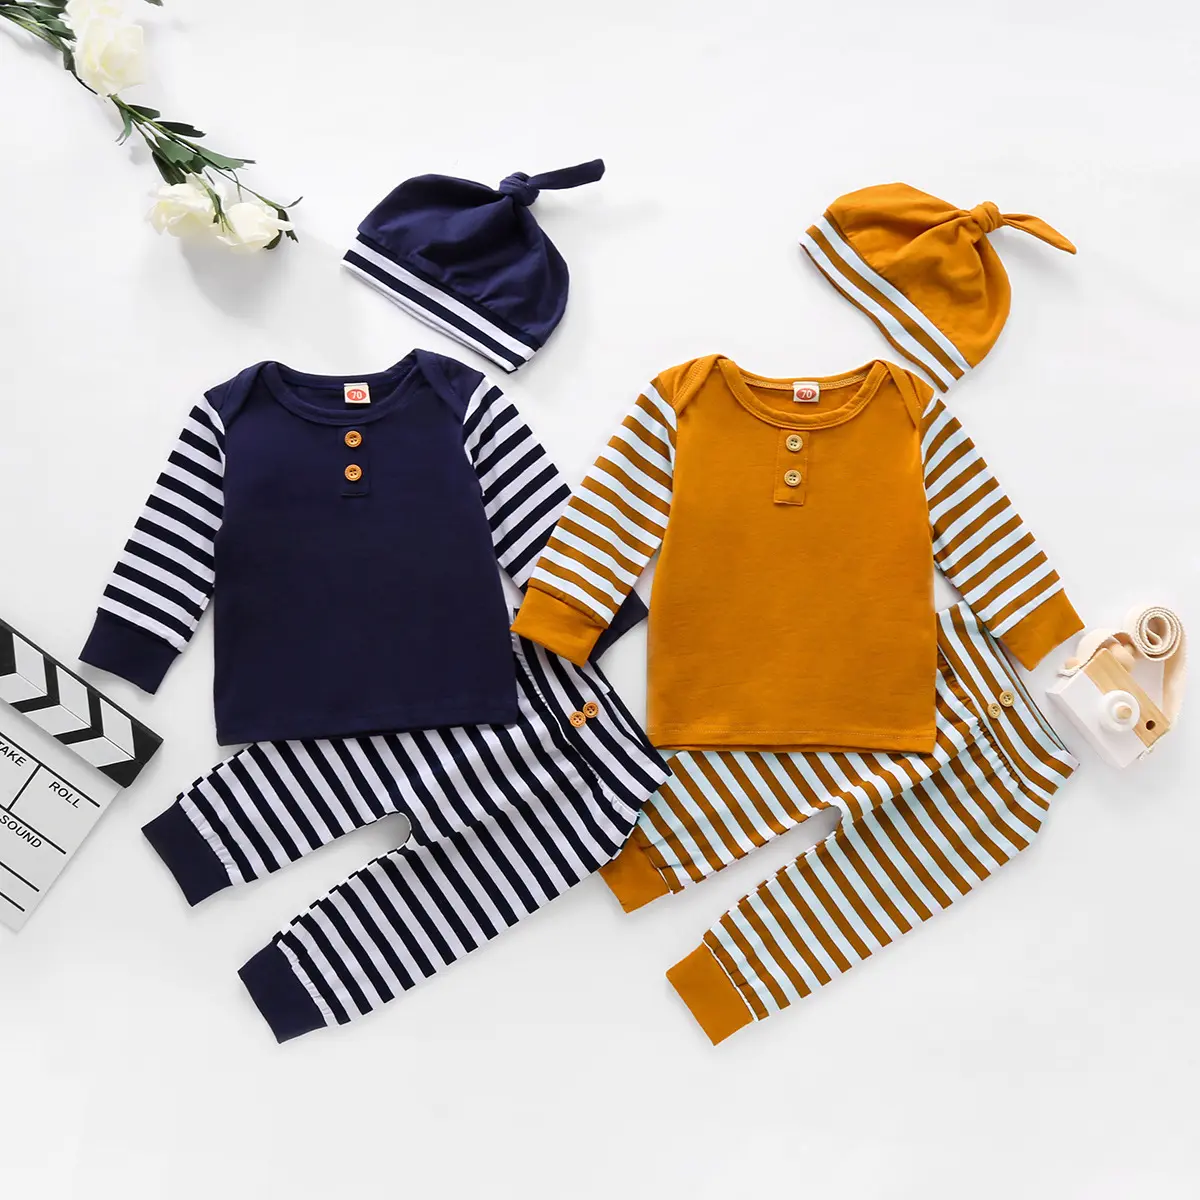 Wholesale Autumn 3pcs Baby Clothing Sets Newborn Baby Boys Girls Top T Shirt+pants+hat Striped Outfits Cotton Clothes Set